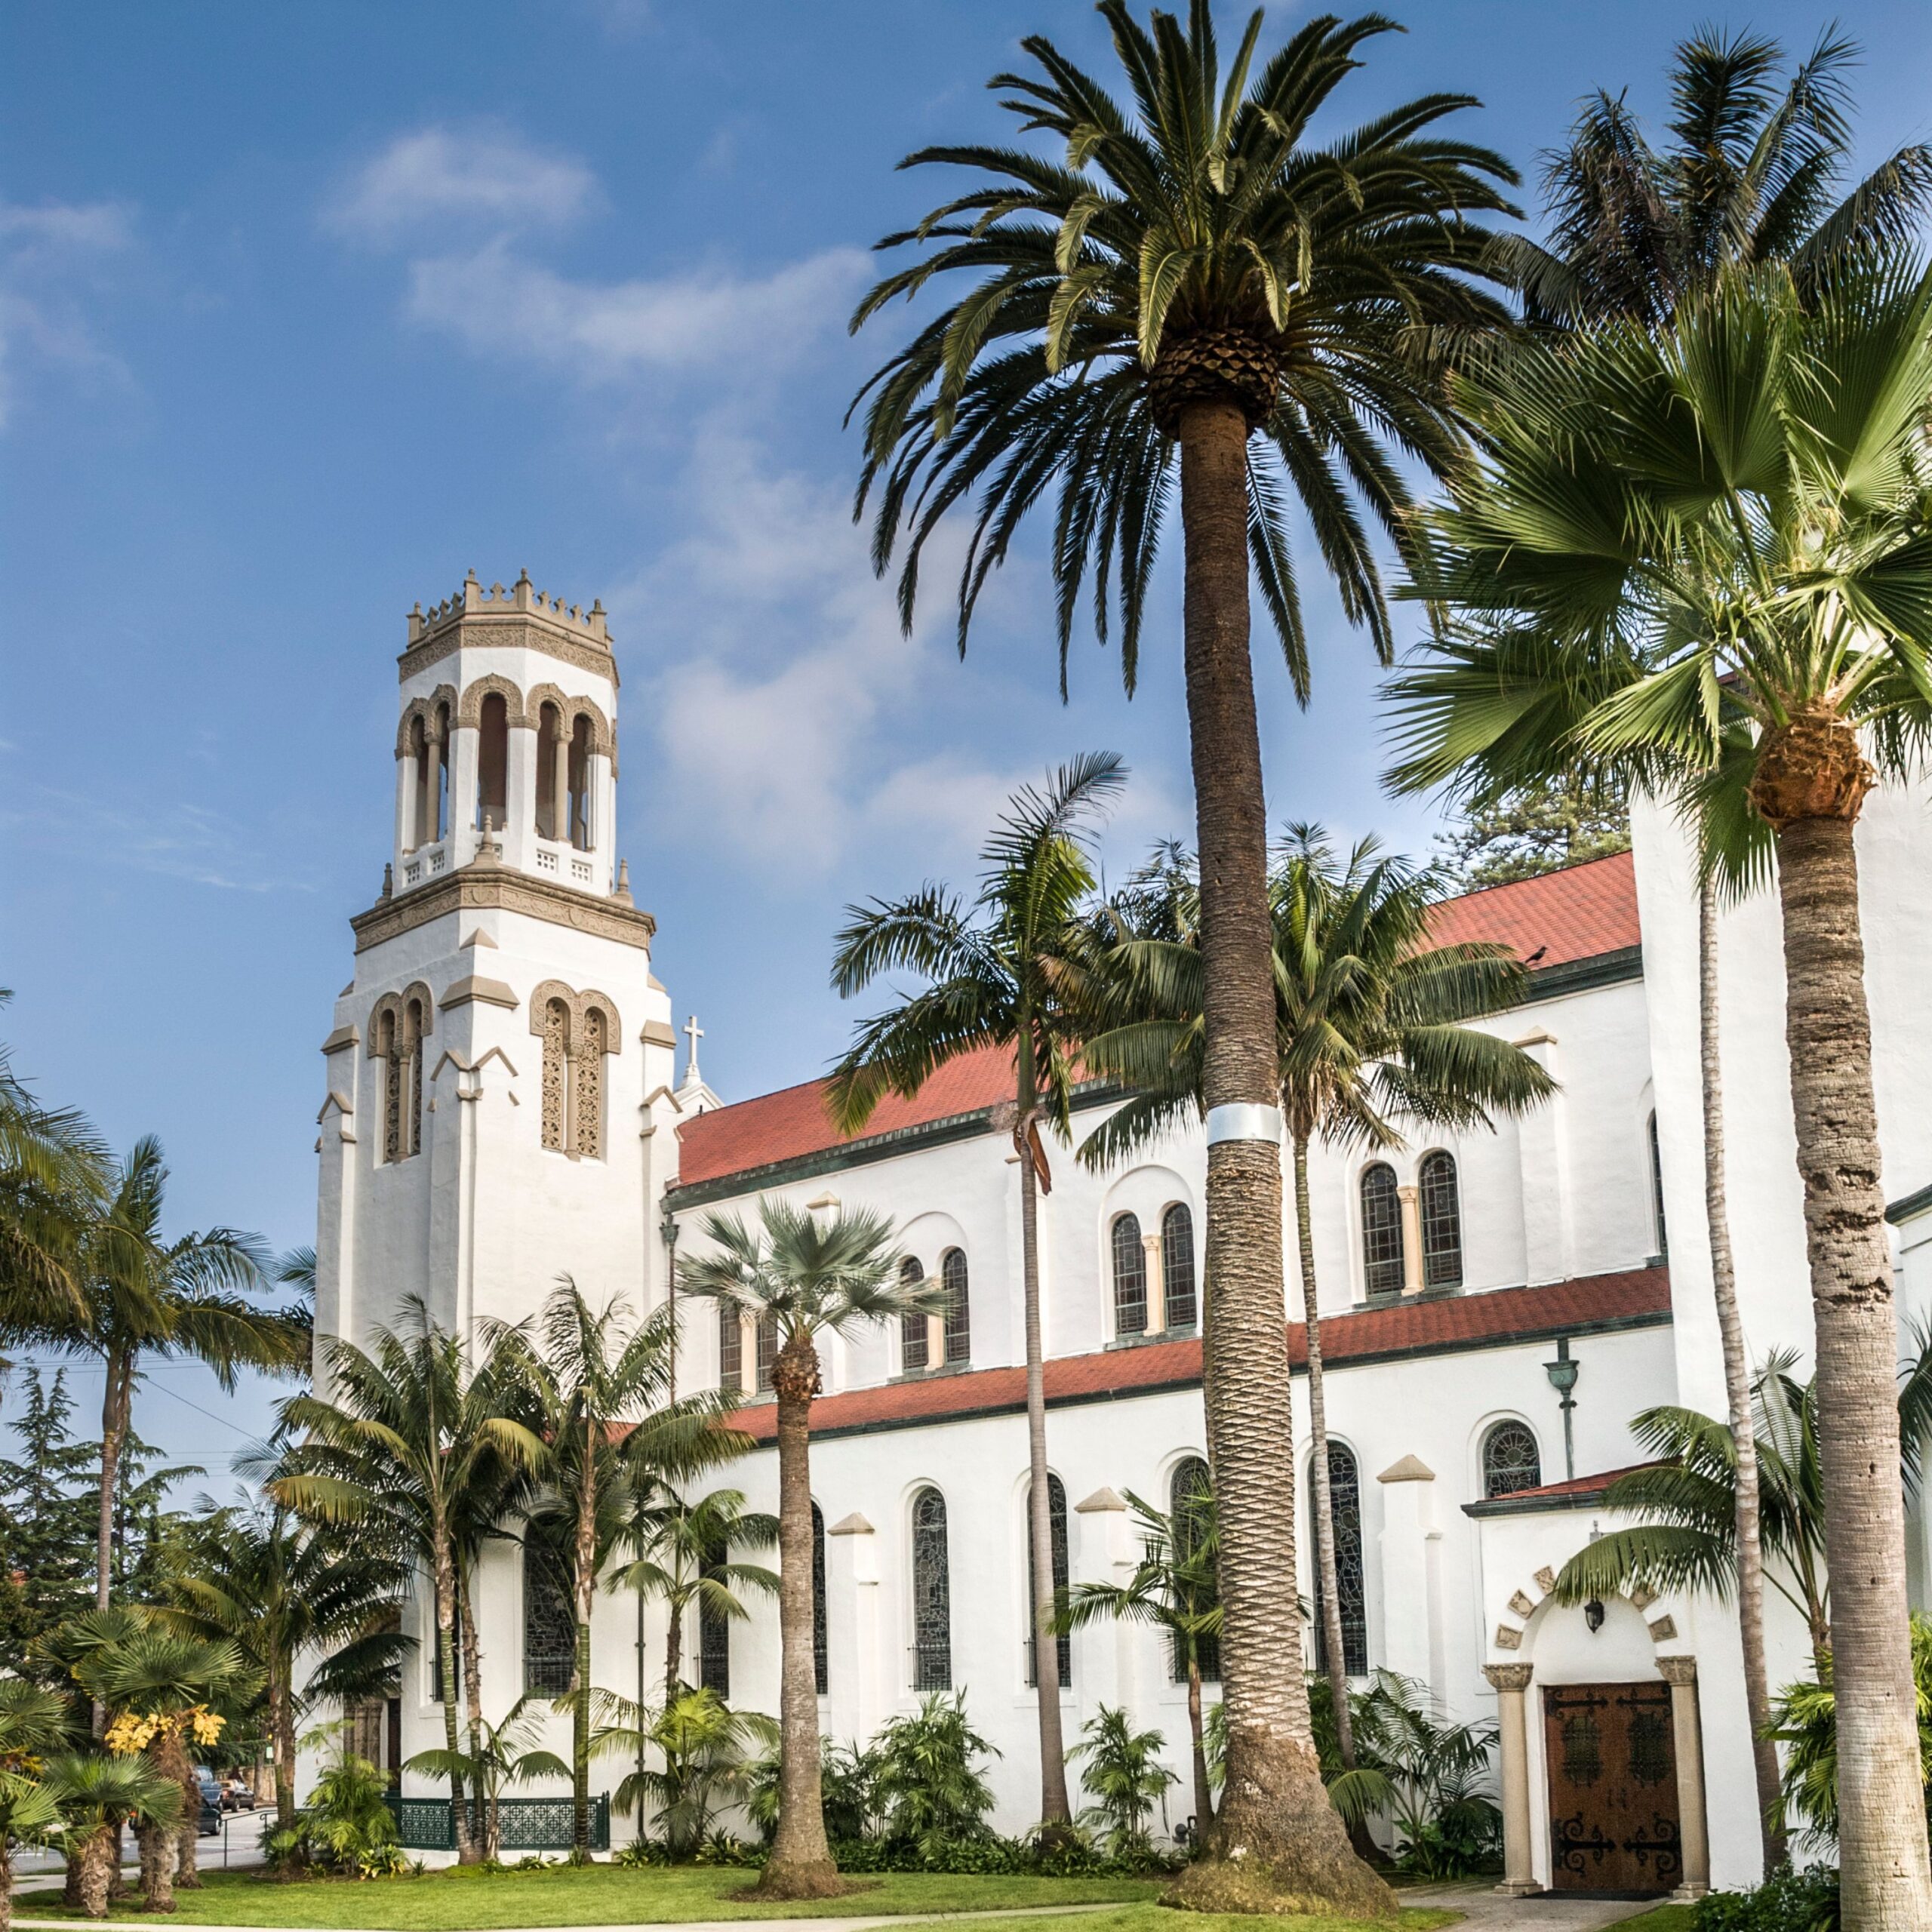 History of the East Side of Santa Barbara